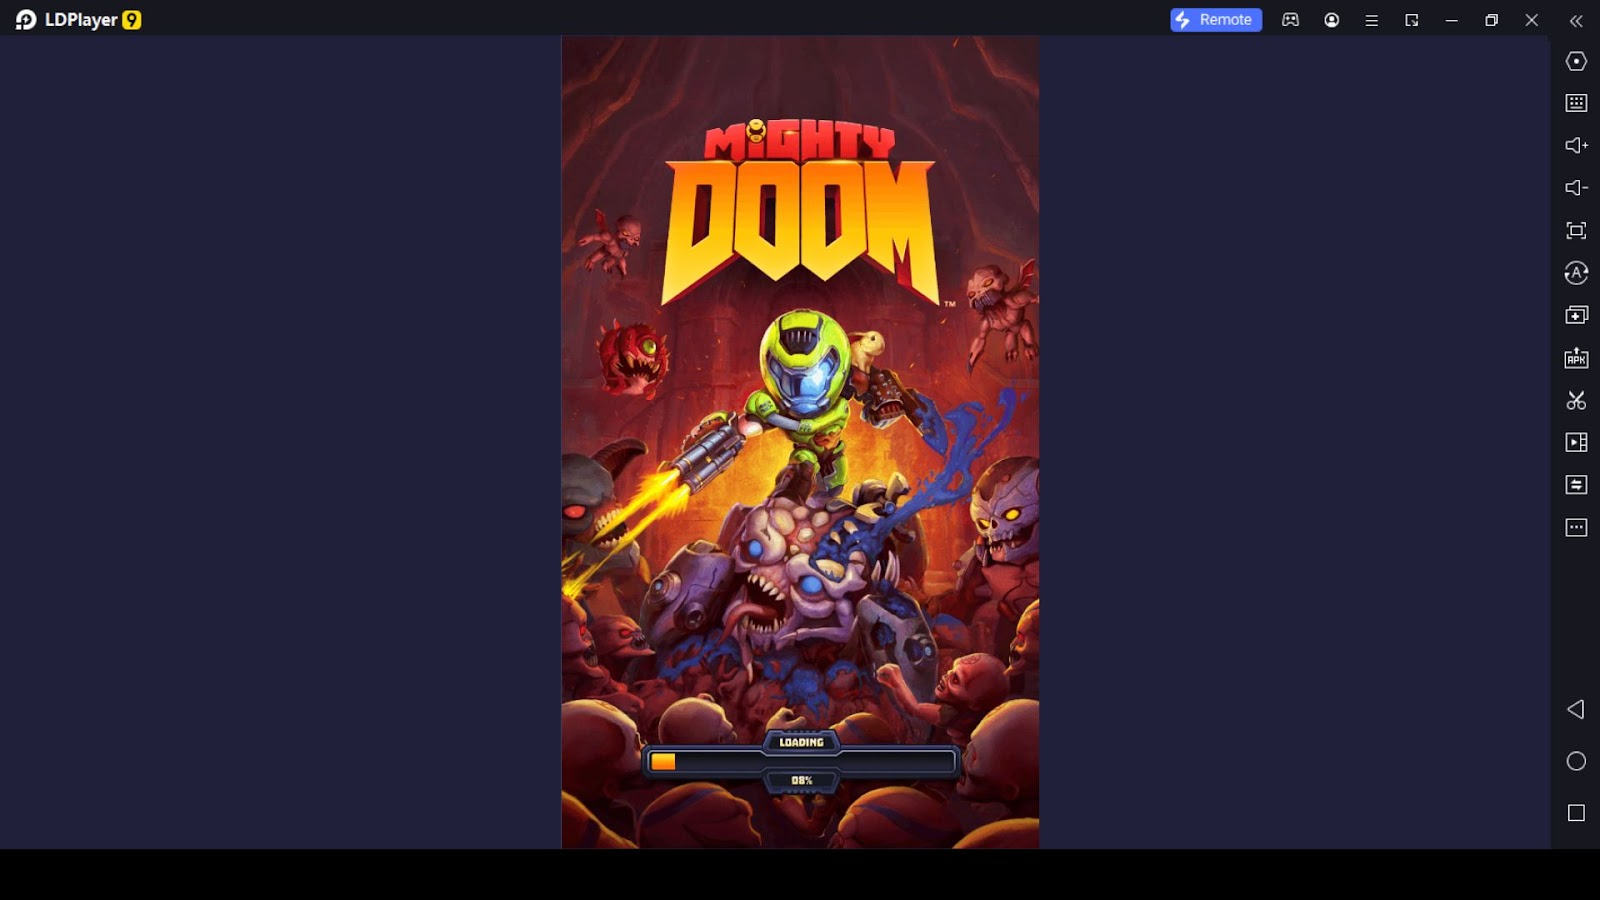 Mighty DOOM Beginner Guide and Gameplay Walkthrough